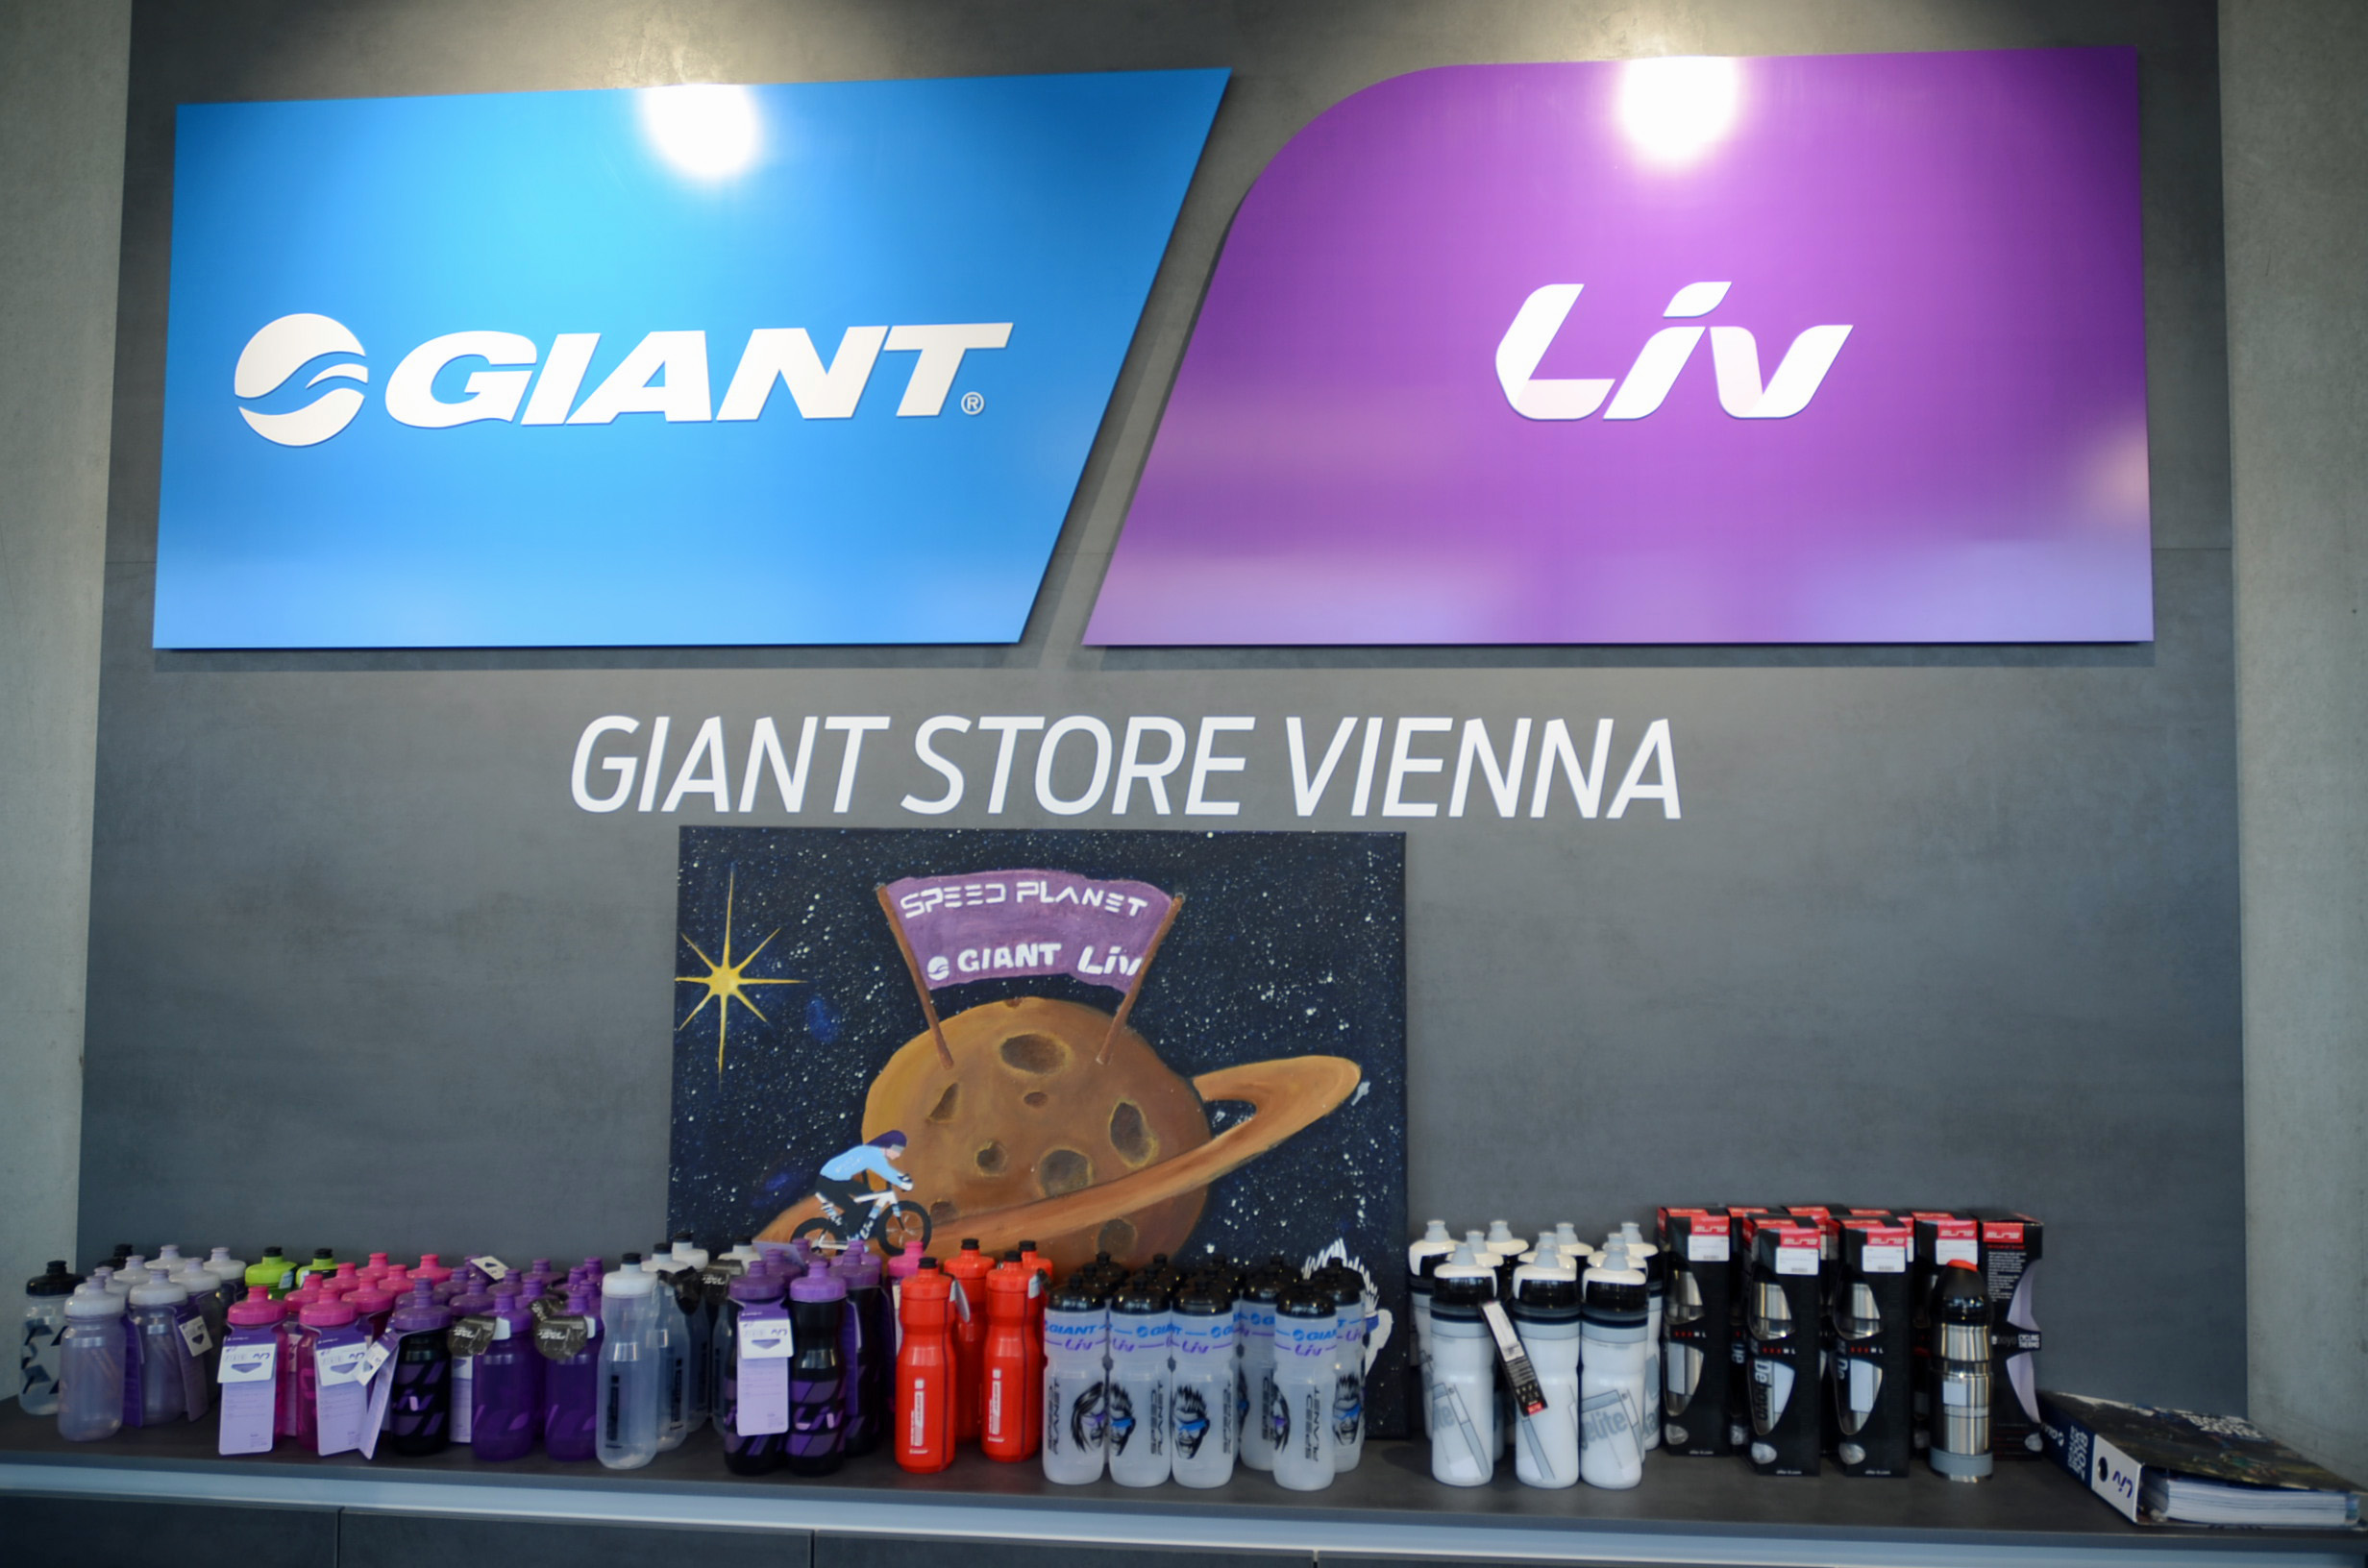 Giant Store Vienna feiert Geburtstag